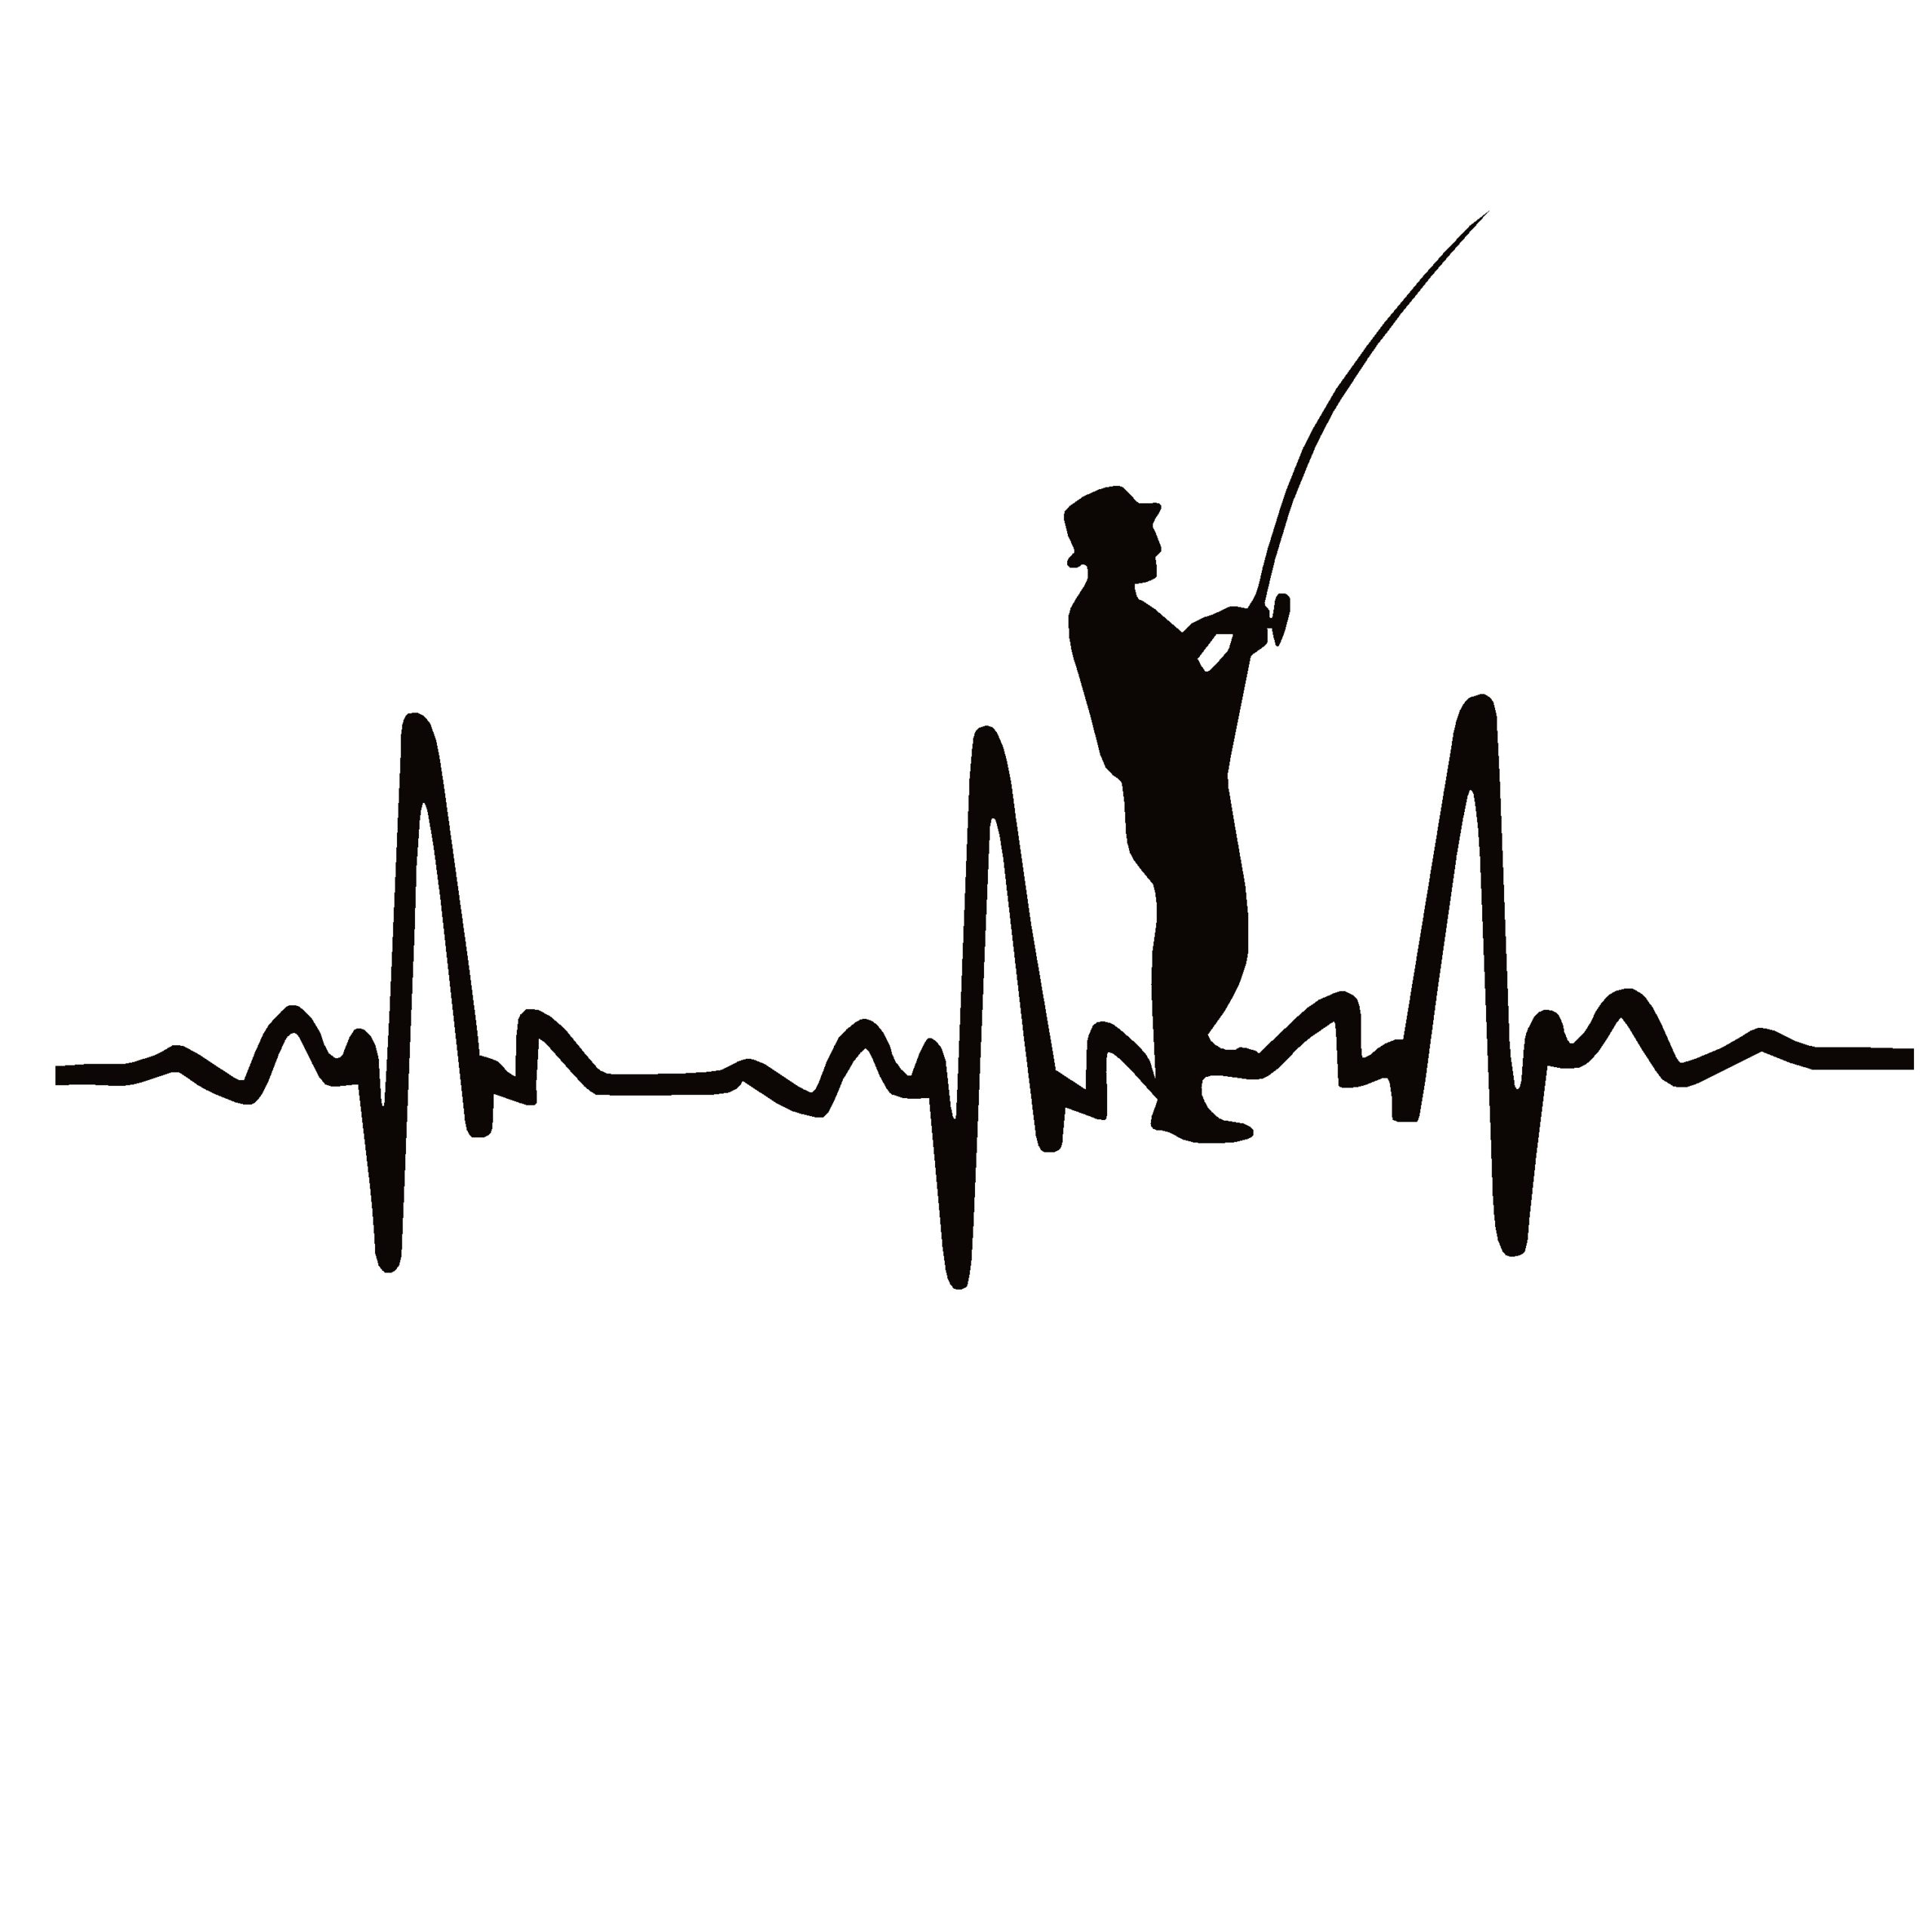 Fishing Heartbeat Classic Round Sticker